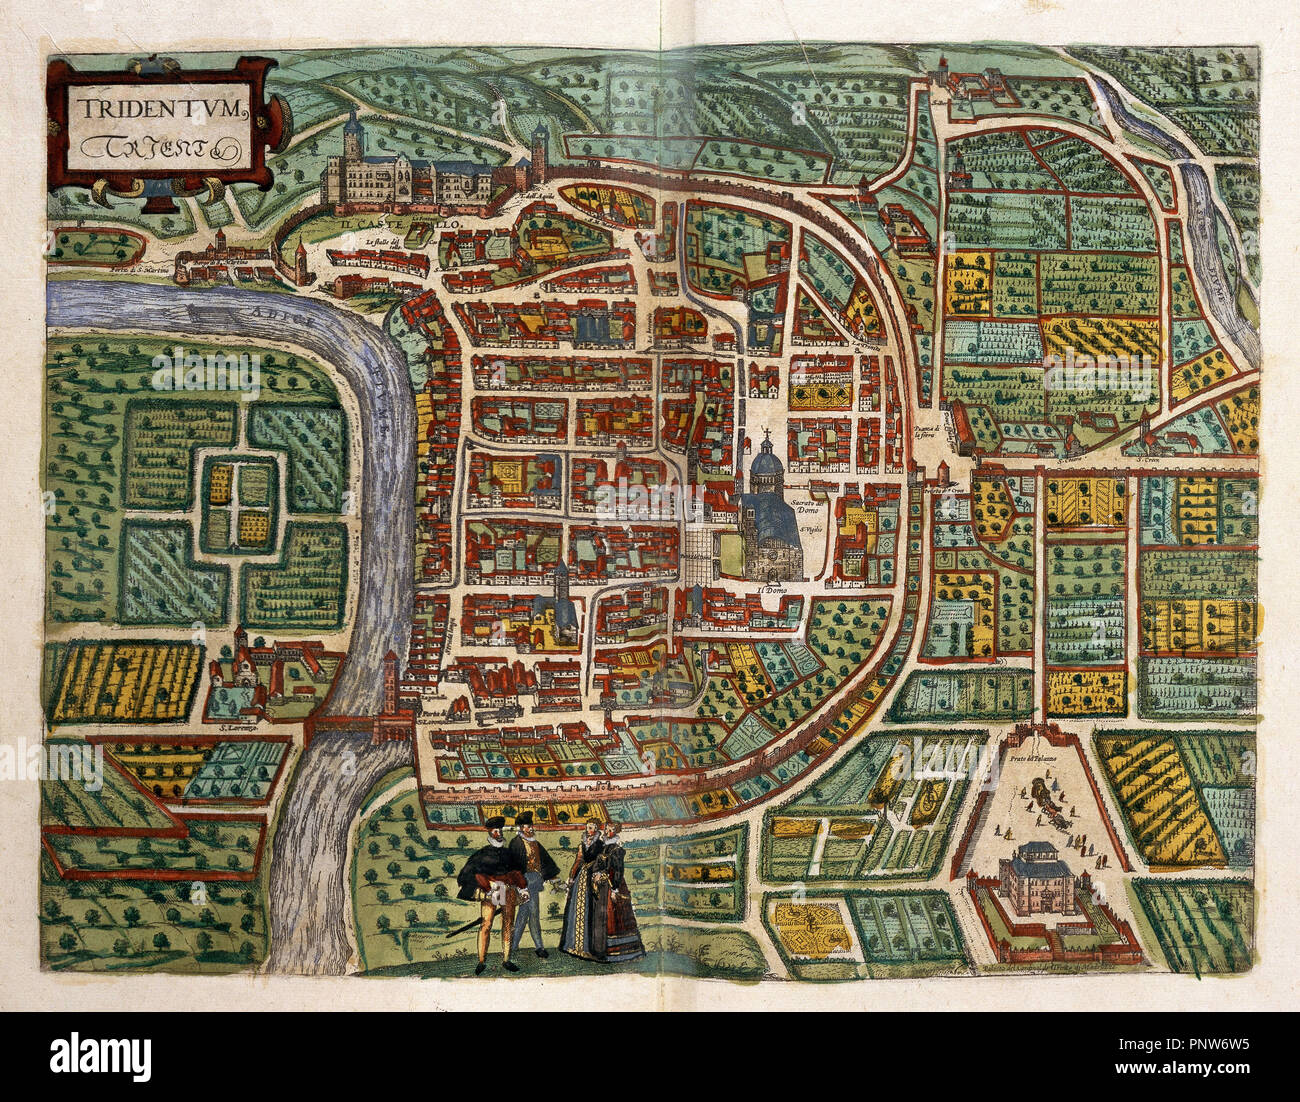 Civitates Orbis Terrarum - View over the city of Trento, Italy. 16th century - 17th century. Madrid, Library of the San Lorenzo del Escorial monastery. Author: BRAUN GEORG 1541-1622 / HOGENBERG FRANS. Location: MONASTERIO-BIBLIOTECA-COLECCION. SAN LORENZO DEL ESCORIAL. MADRID. SPAIN. Stock Photo